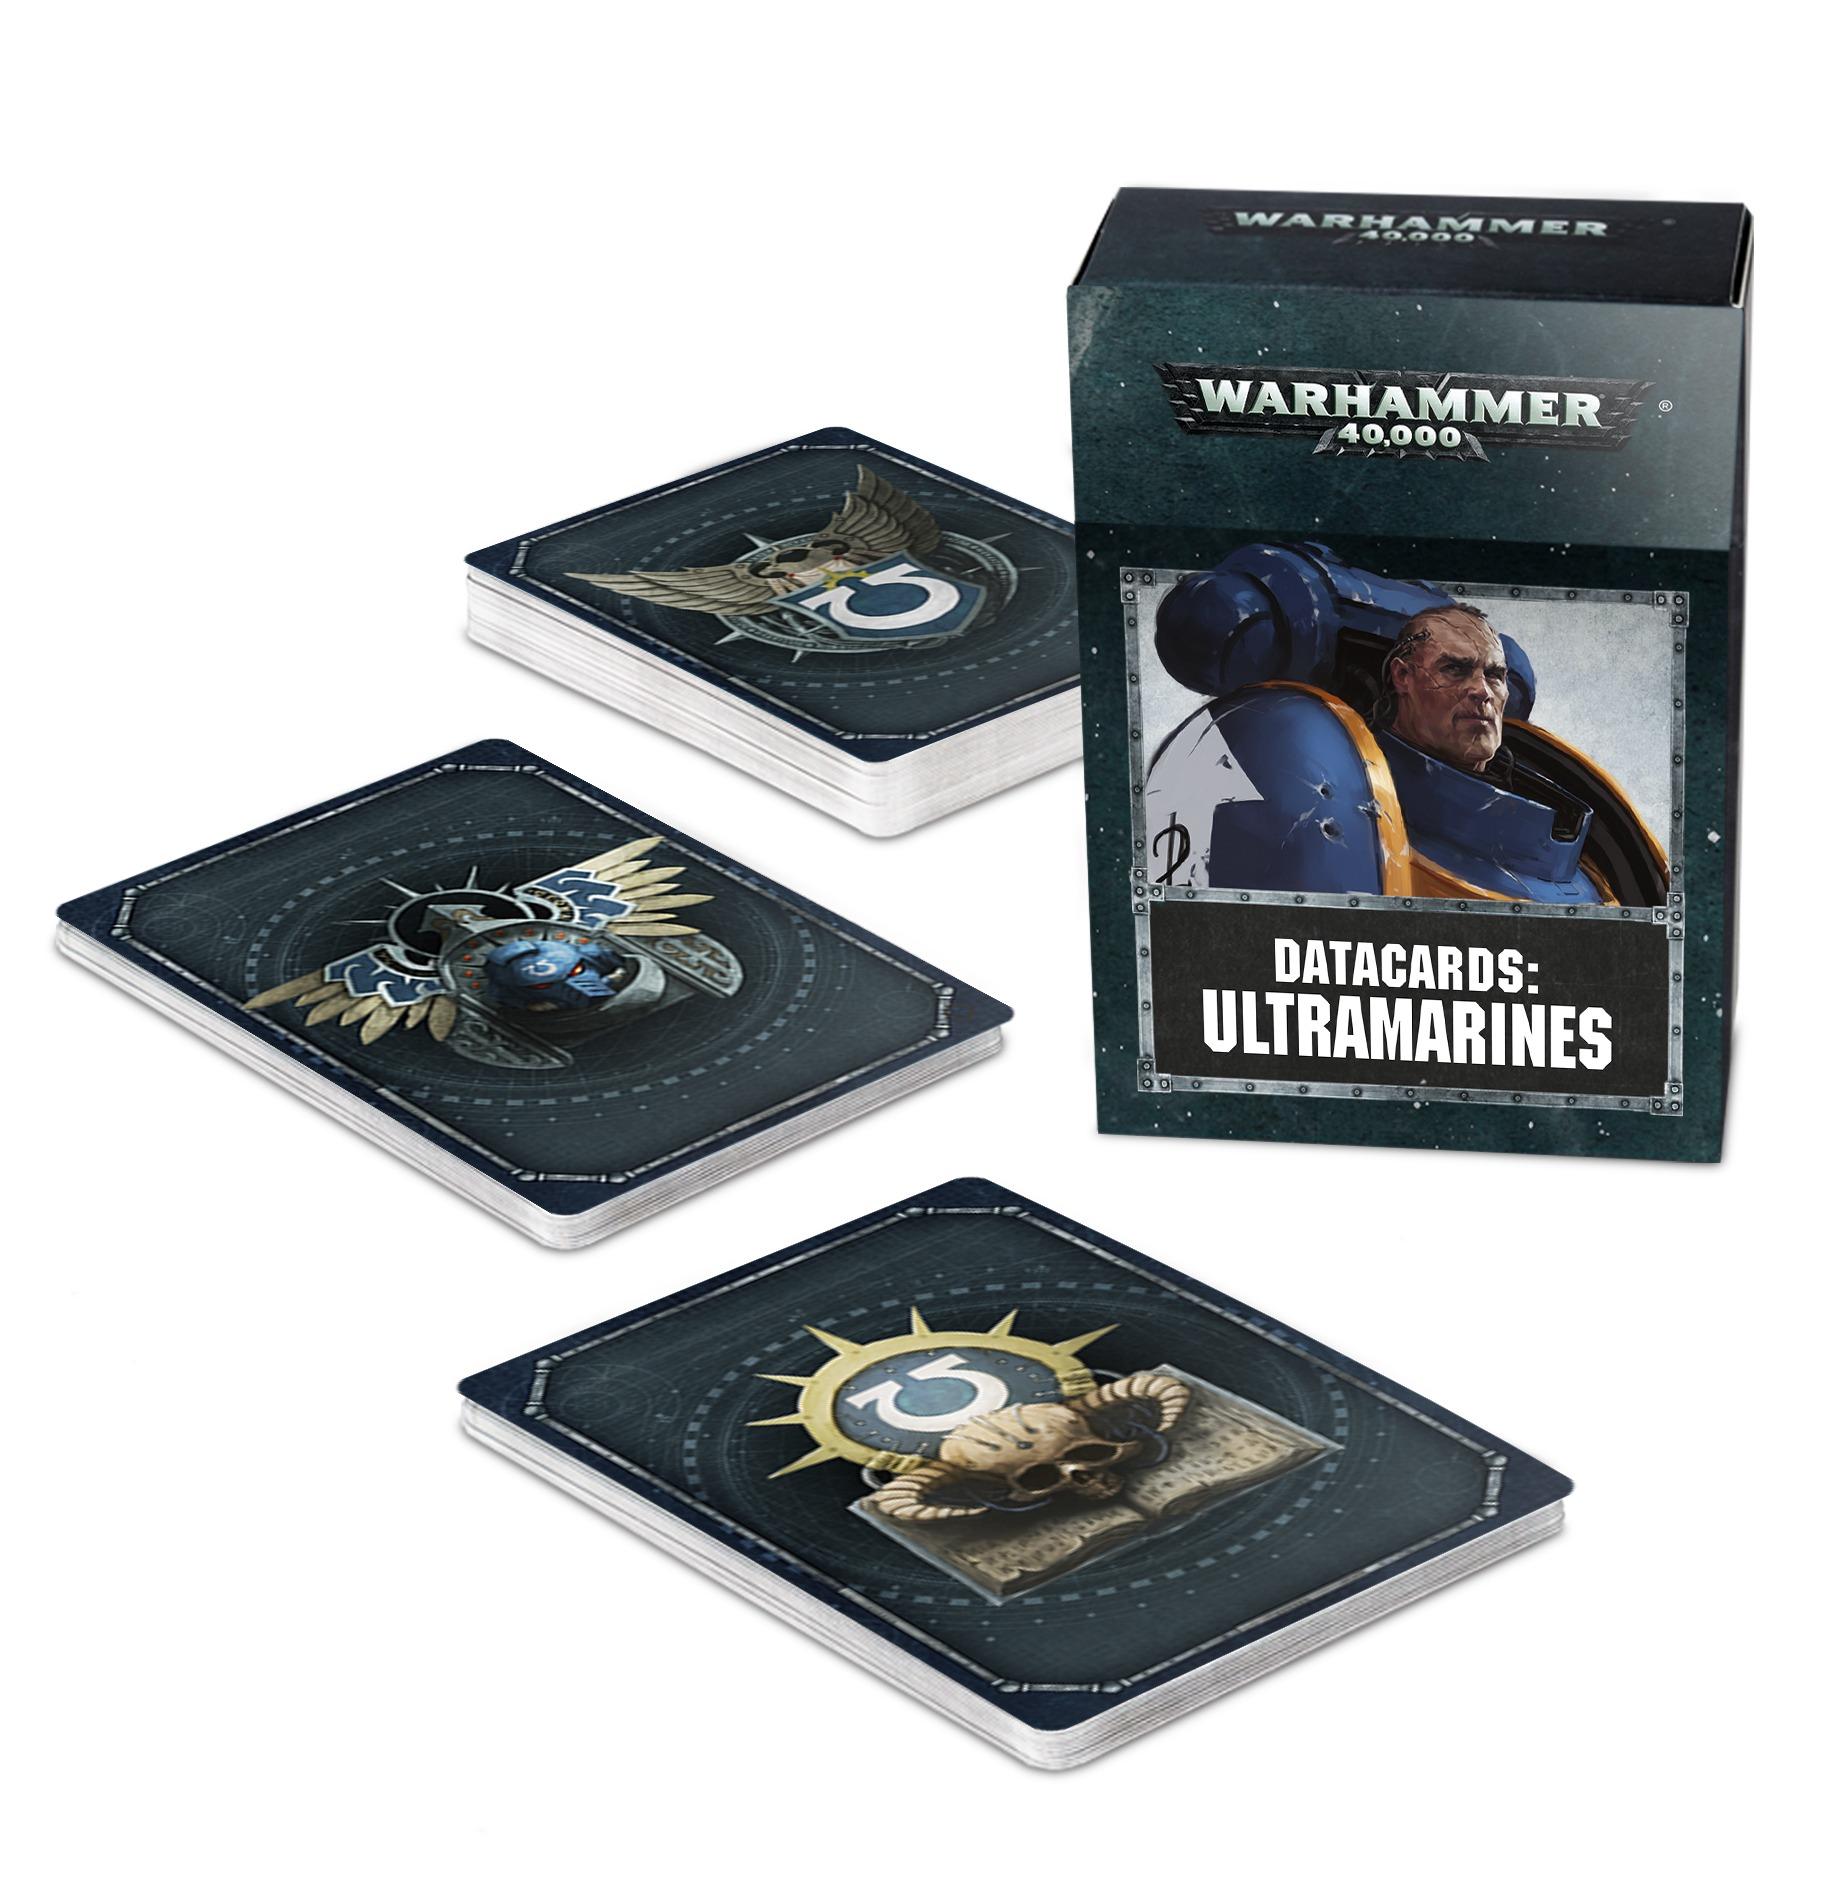 Warhammer 40,000 - Datakarten: Ultramarines